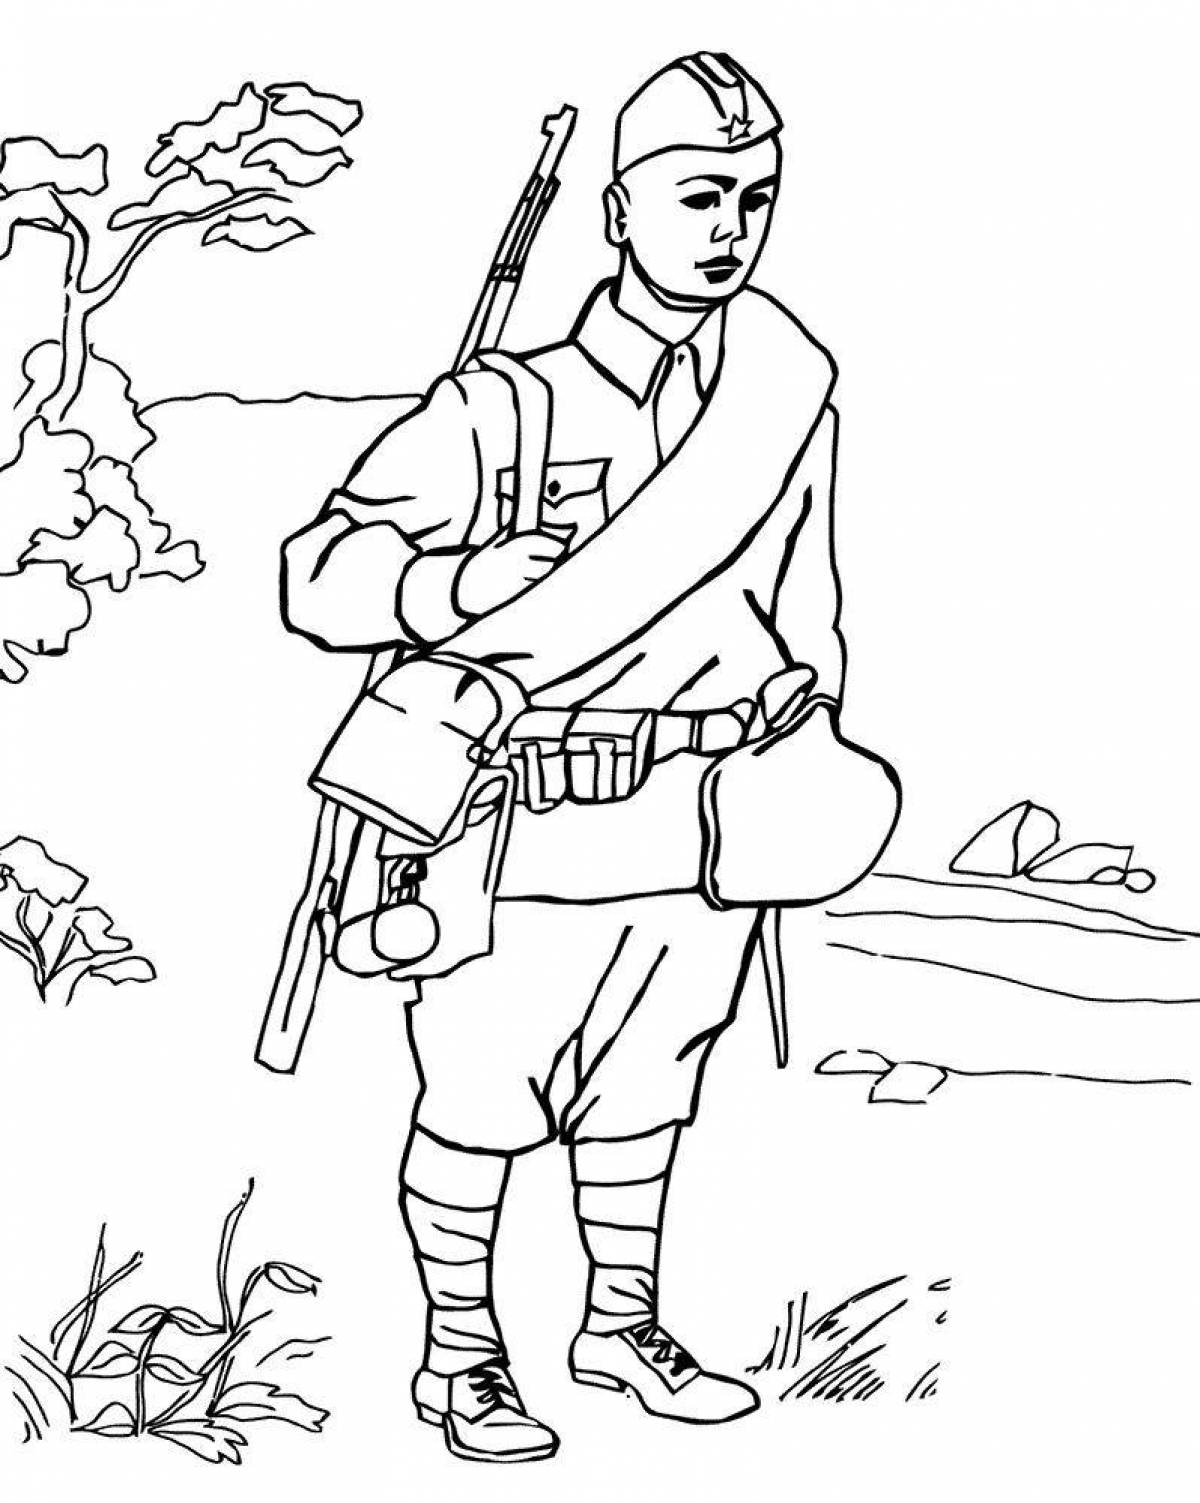 Остроумная раскраска рисунок солдата от школьника